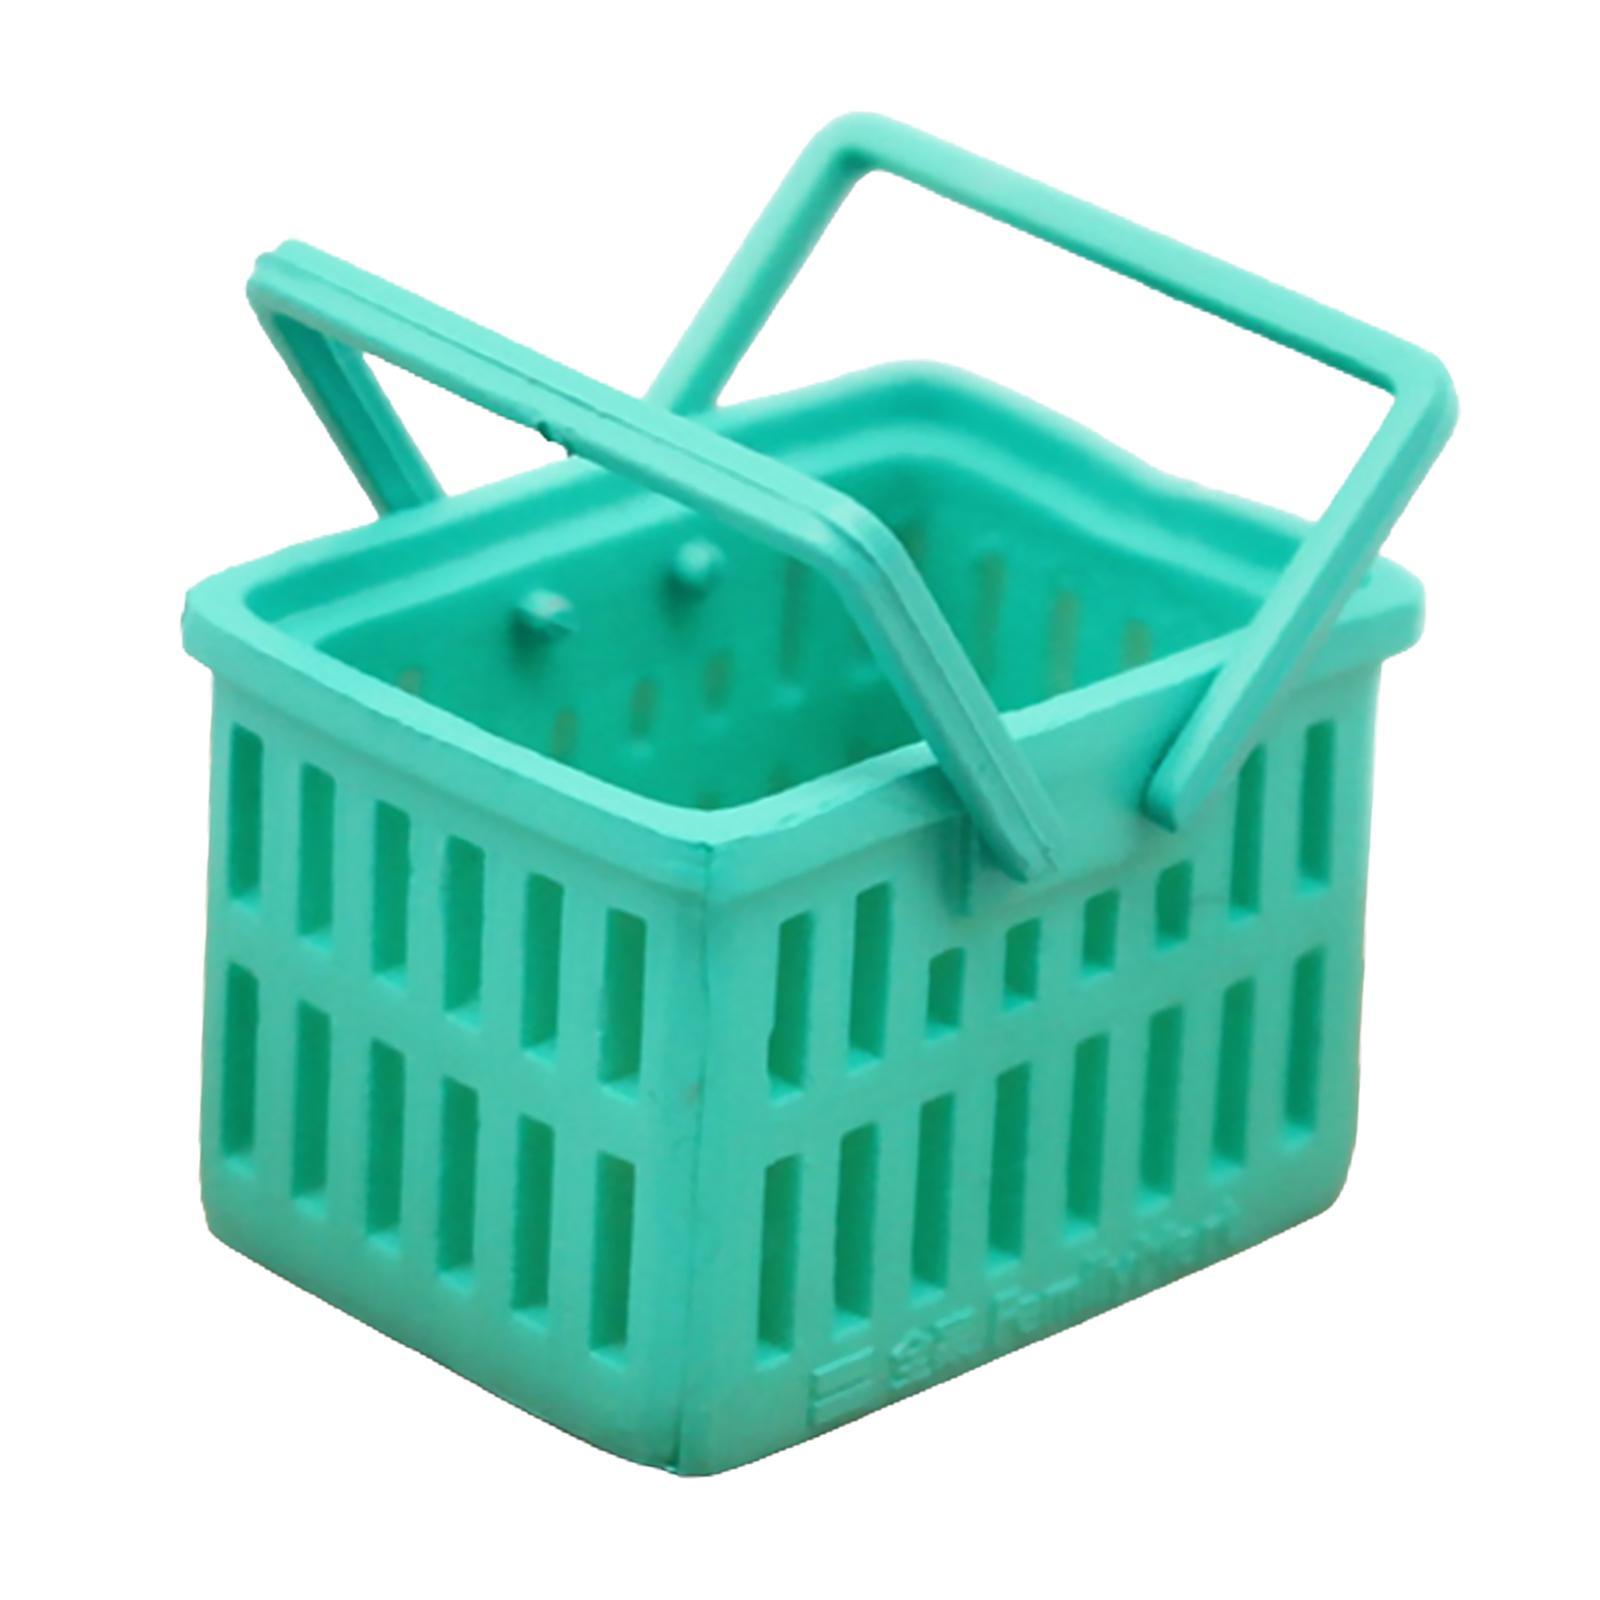 Dollhouse Miniature Shopping Baskets Mini Supermarket Basket Model for Green